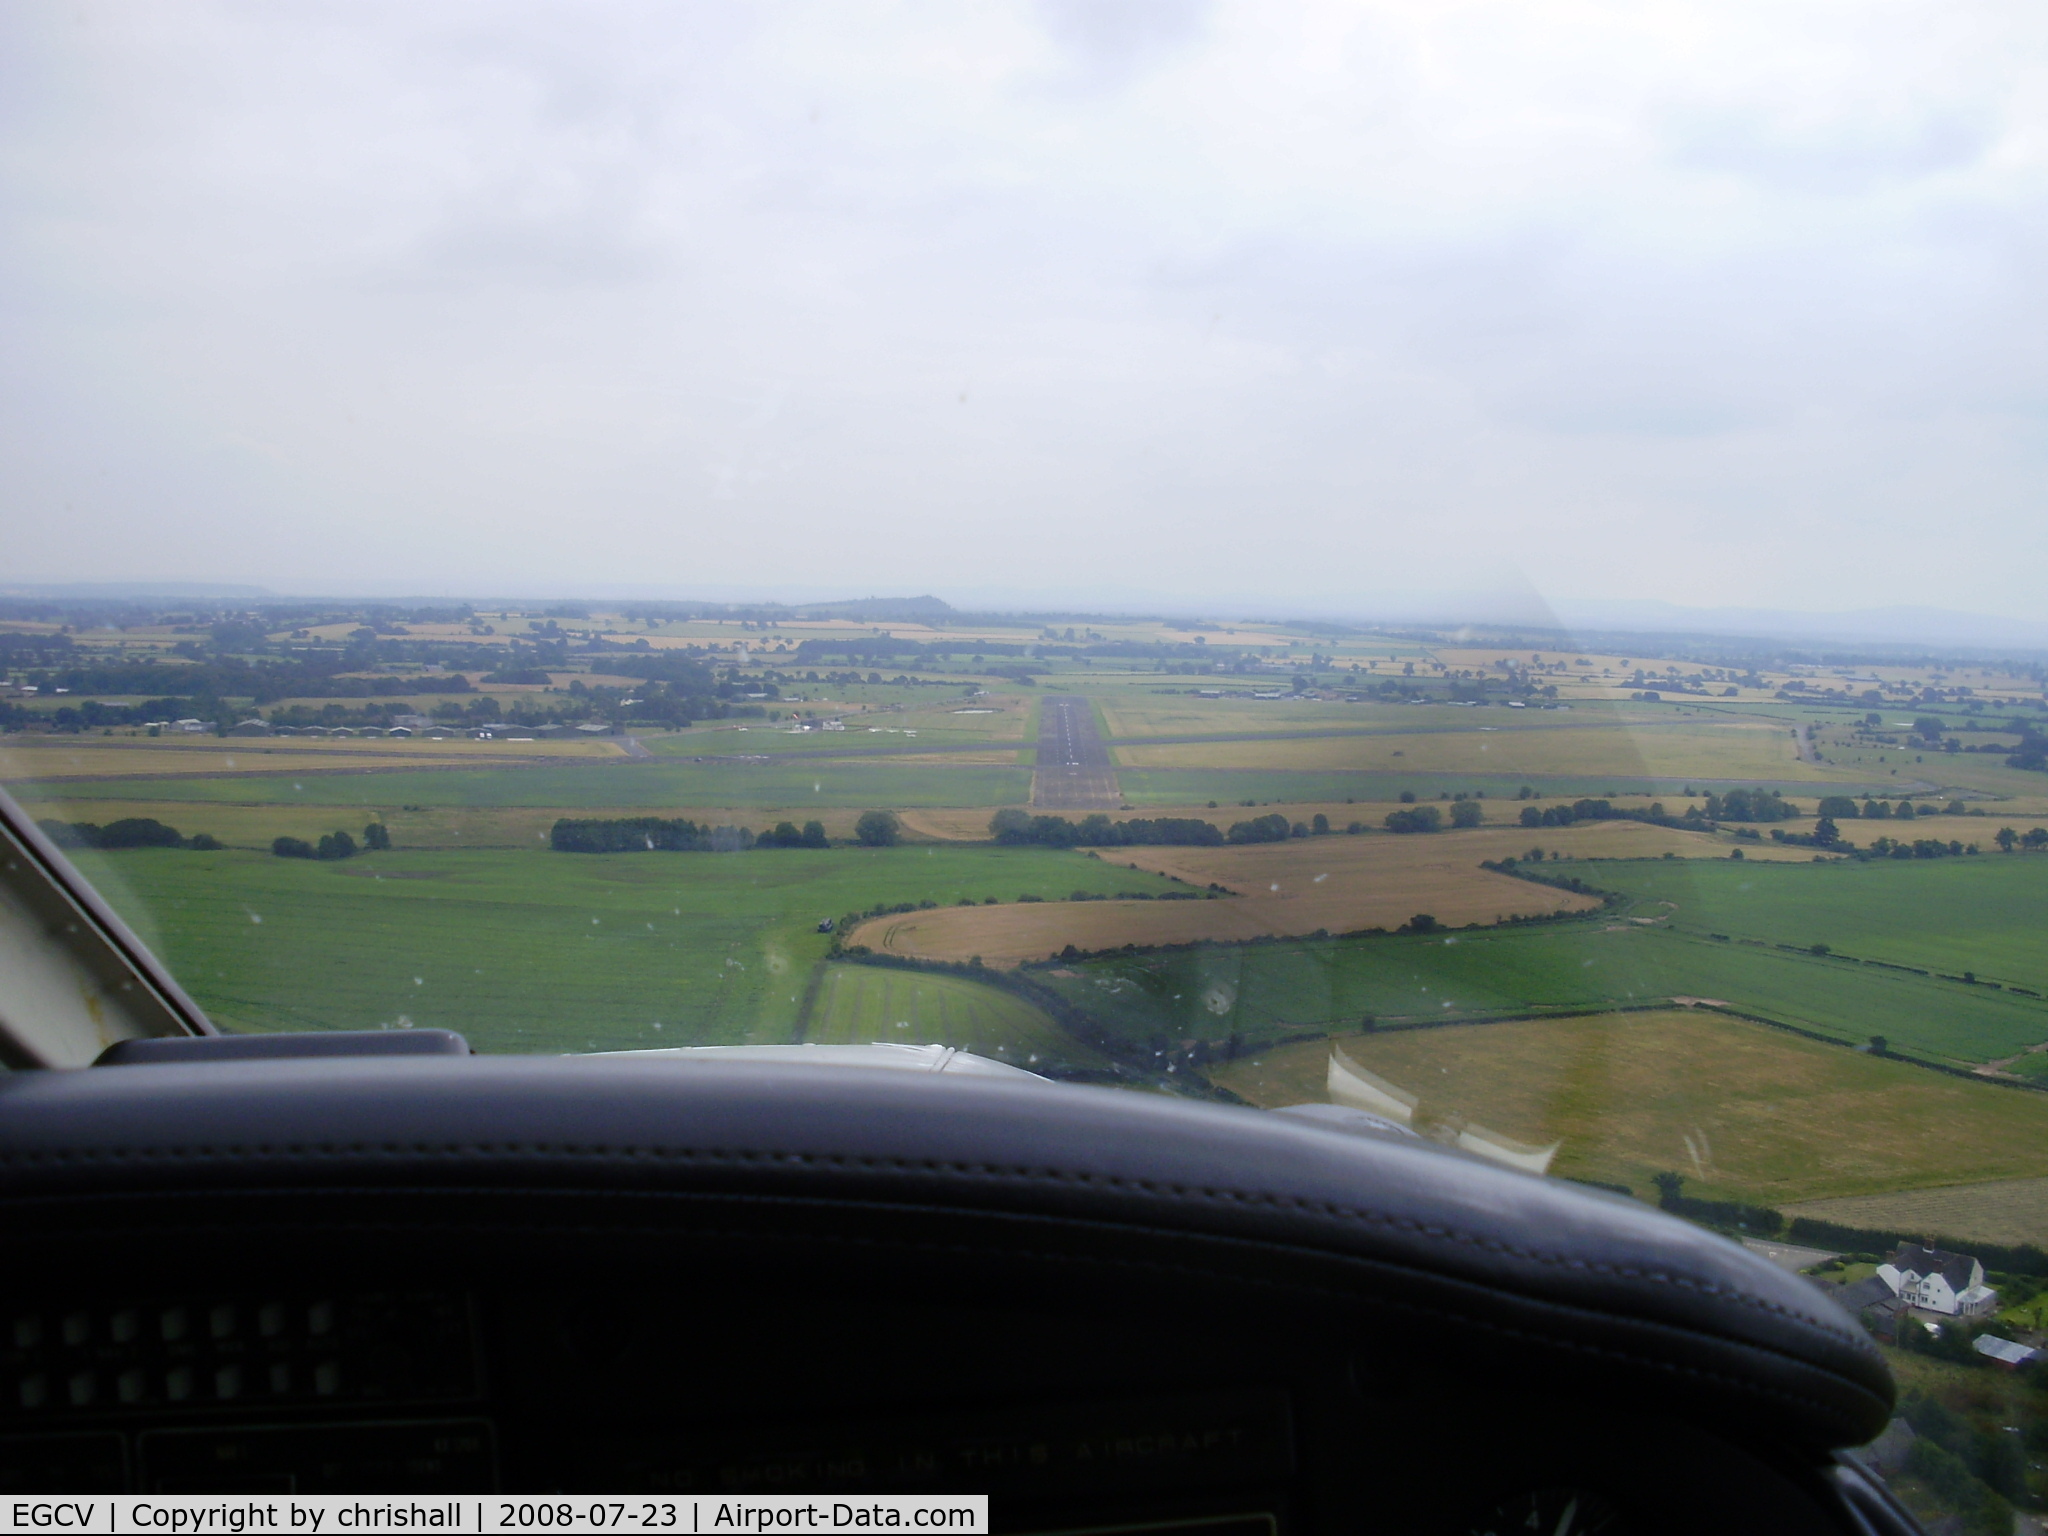 Sleap Airfield Airport, Shrewsbury, England United Kingdom (EGCV) - Final approach to Sleap